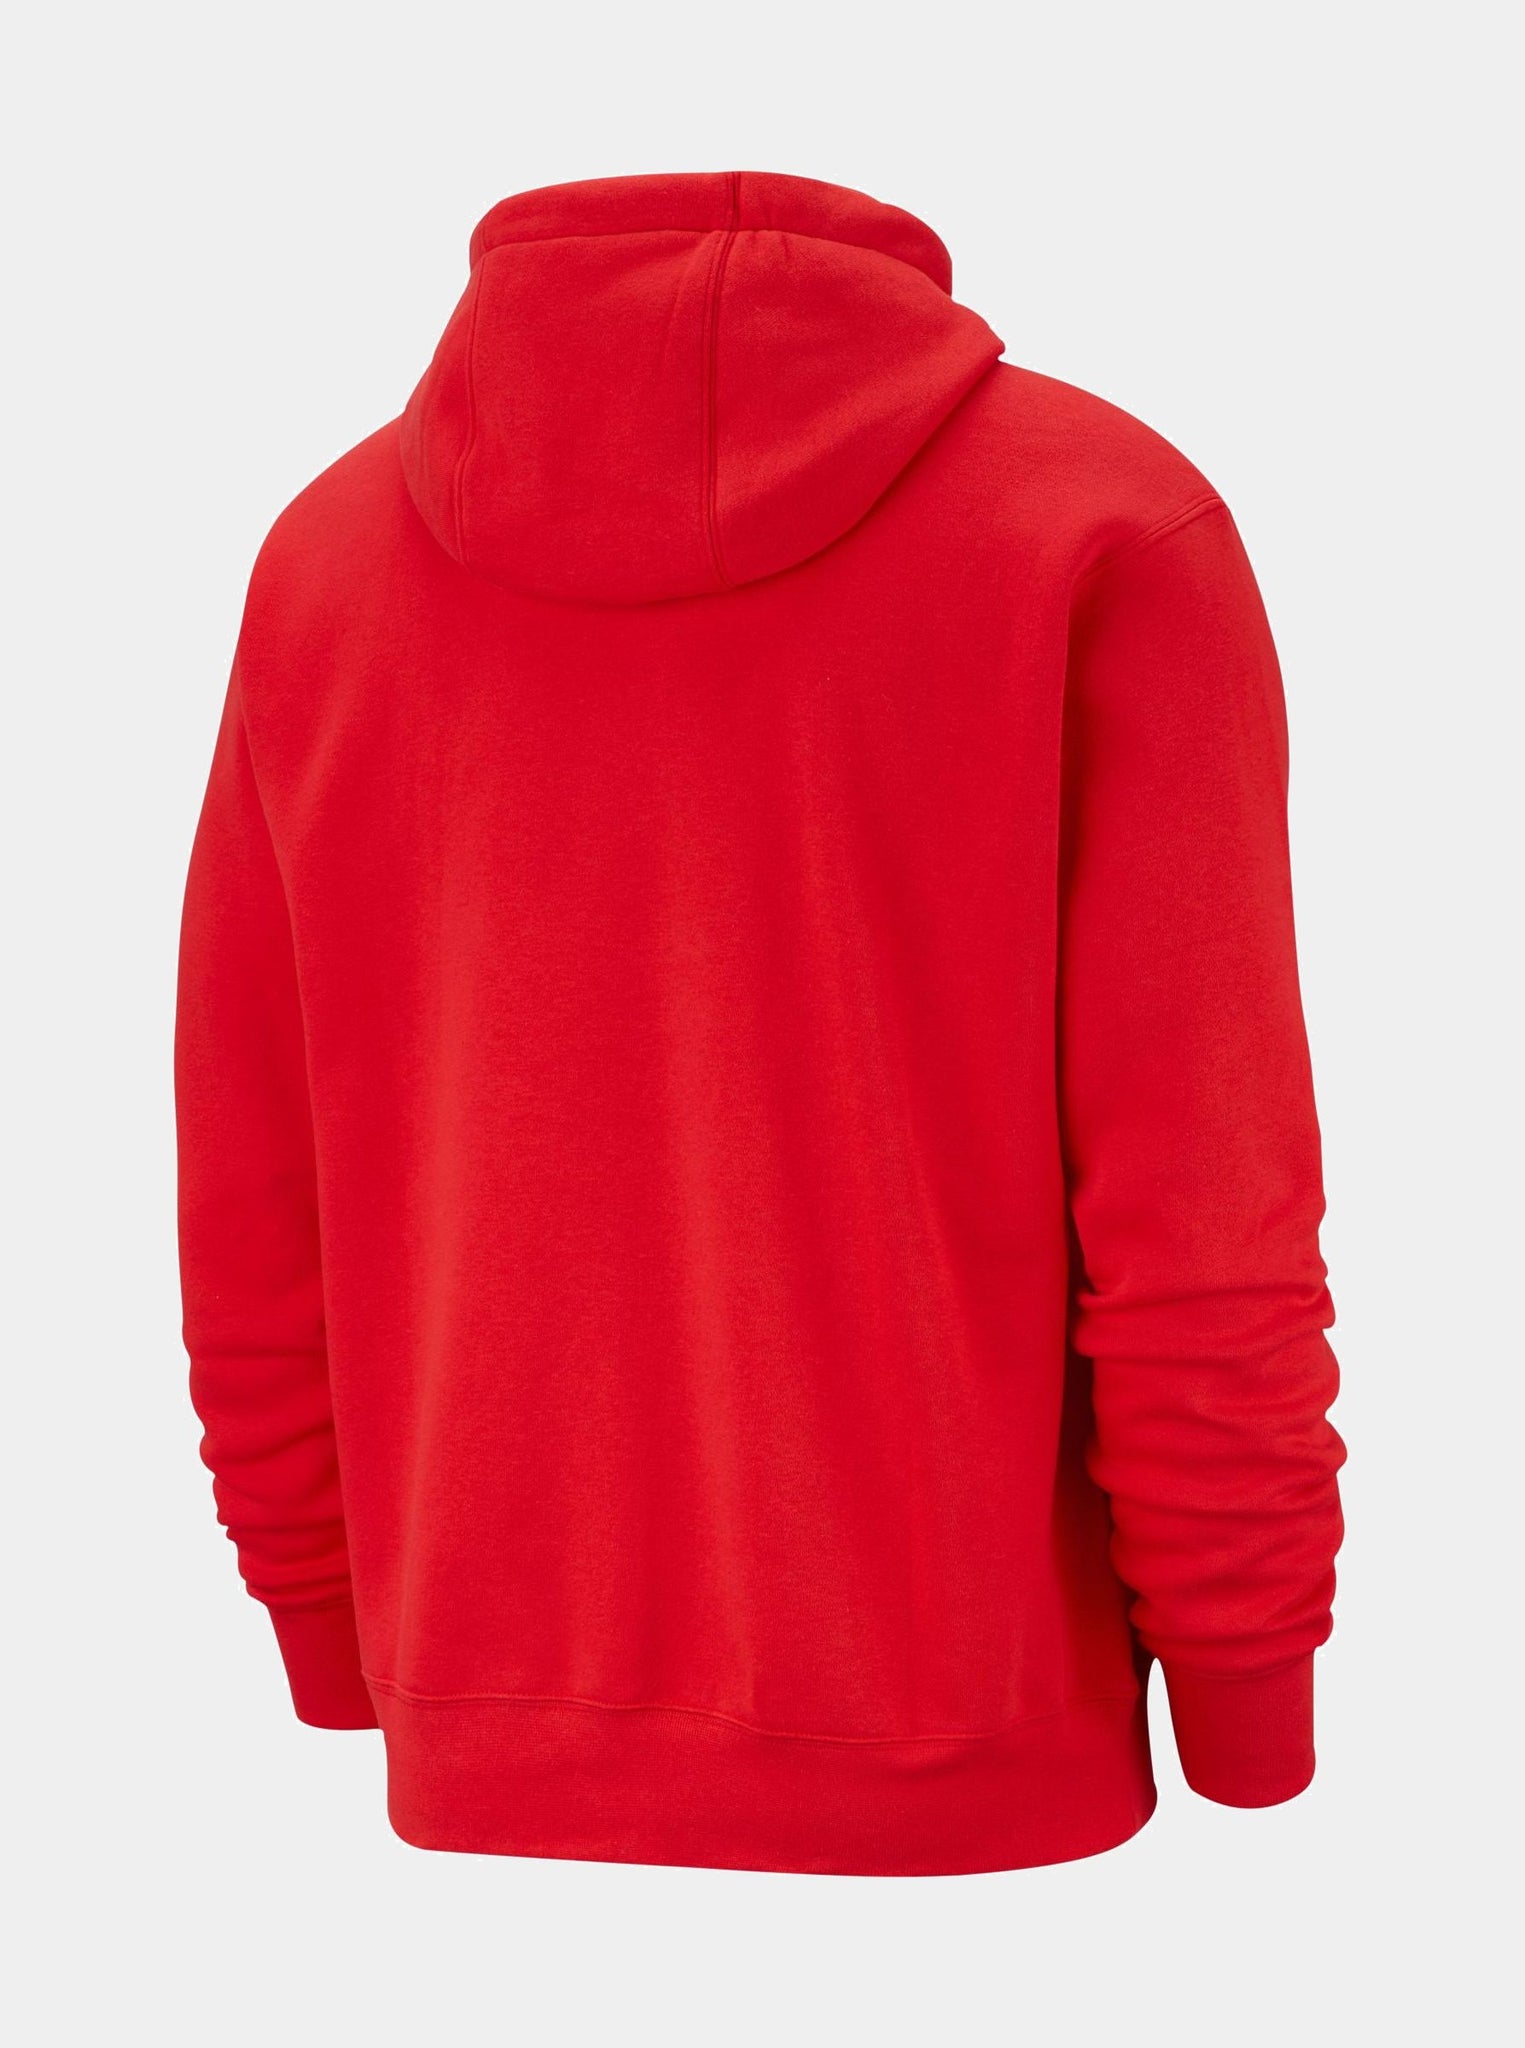 Sportswear Club Fleece Pullover Mens Hoodie (Red/White)